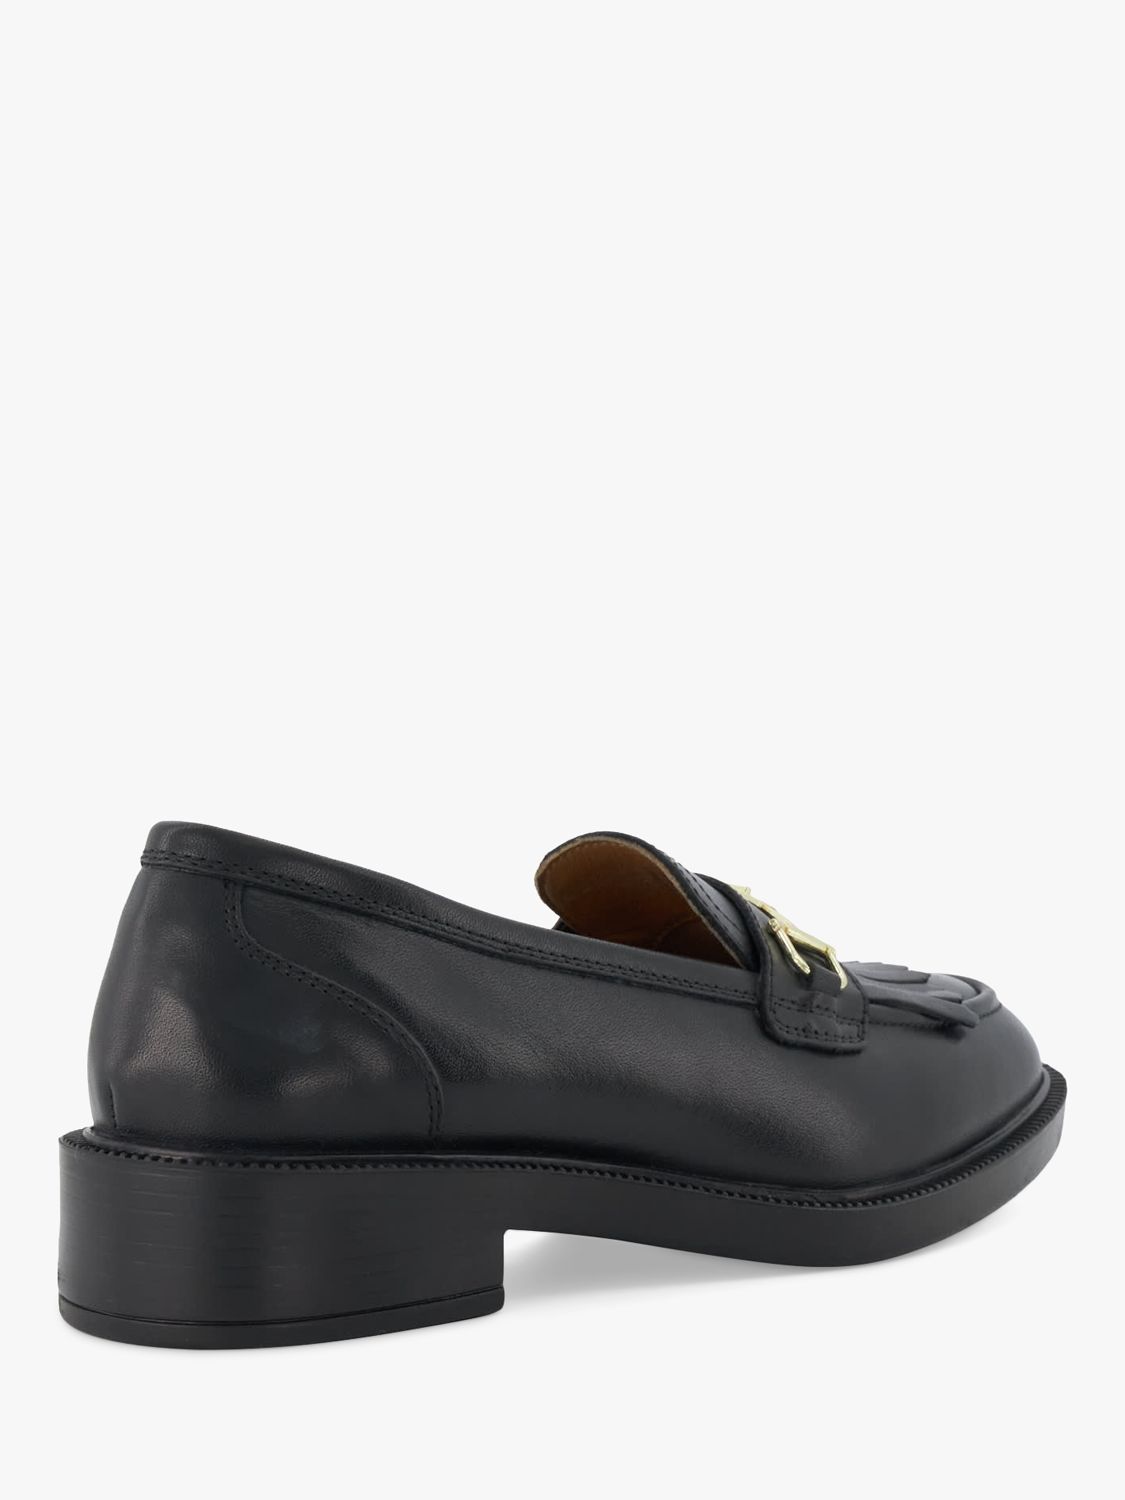 John Lewis Women's Black Leather Shoes Size 37 Eu 6.5 -  Norway